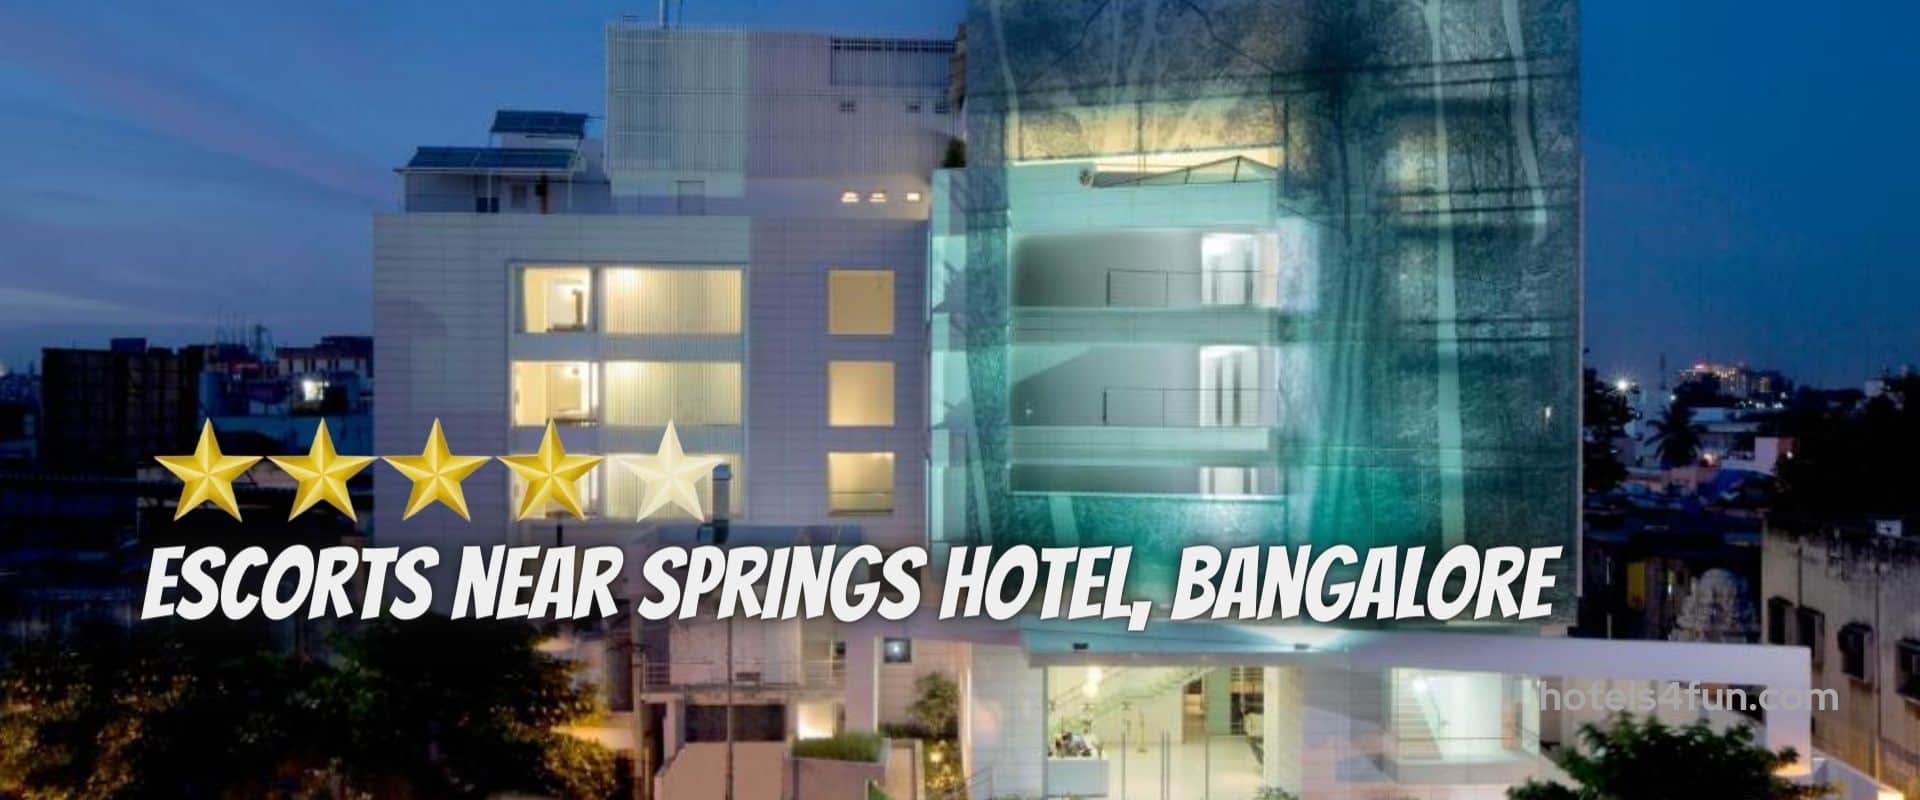 escorts-near-springs-hotel-bangalore Hotel Escorts